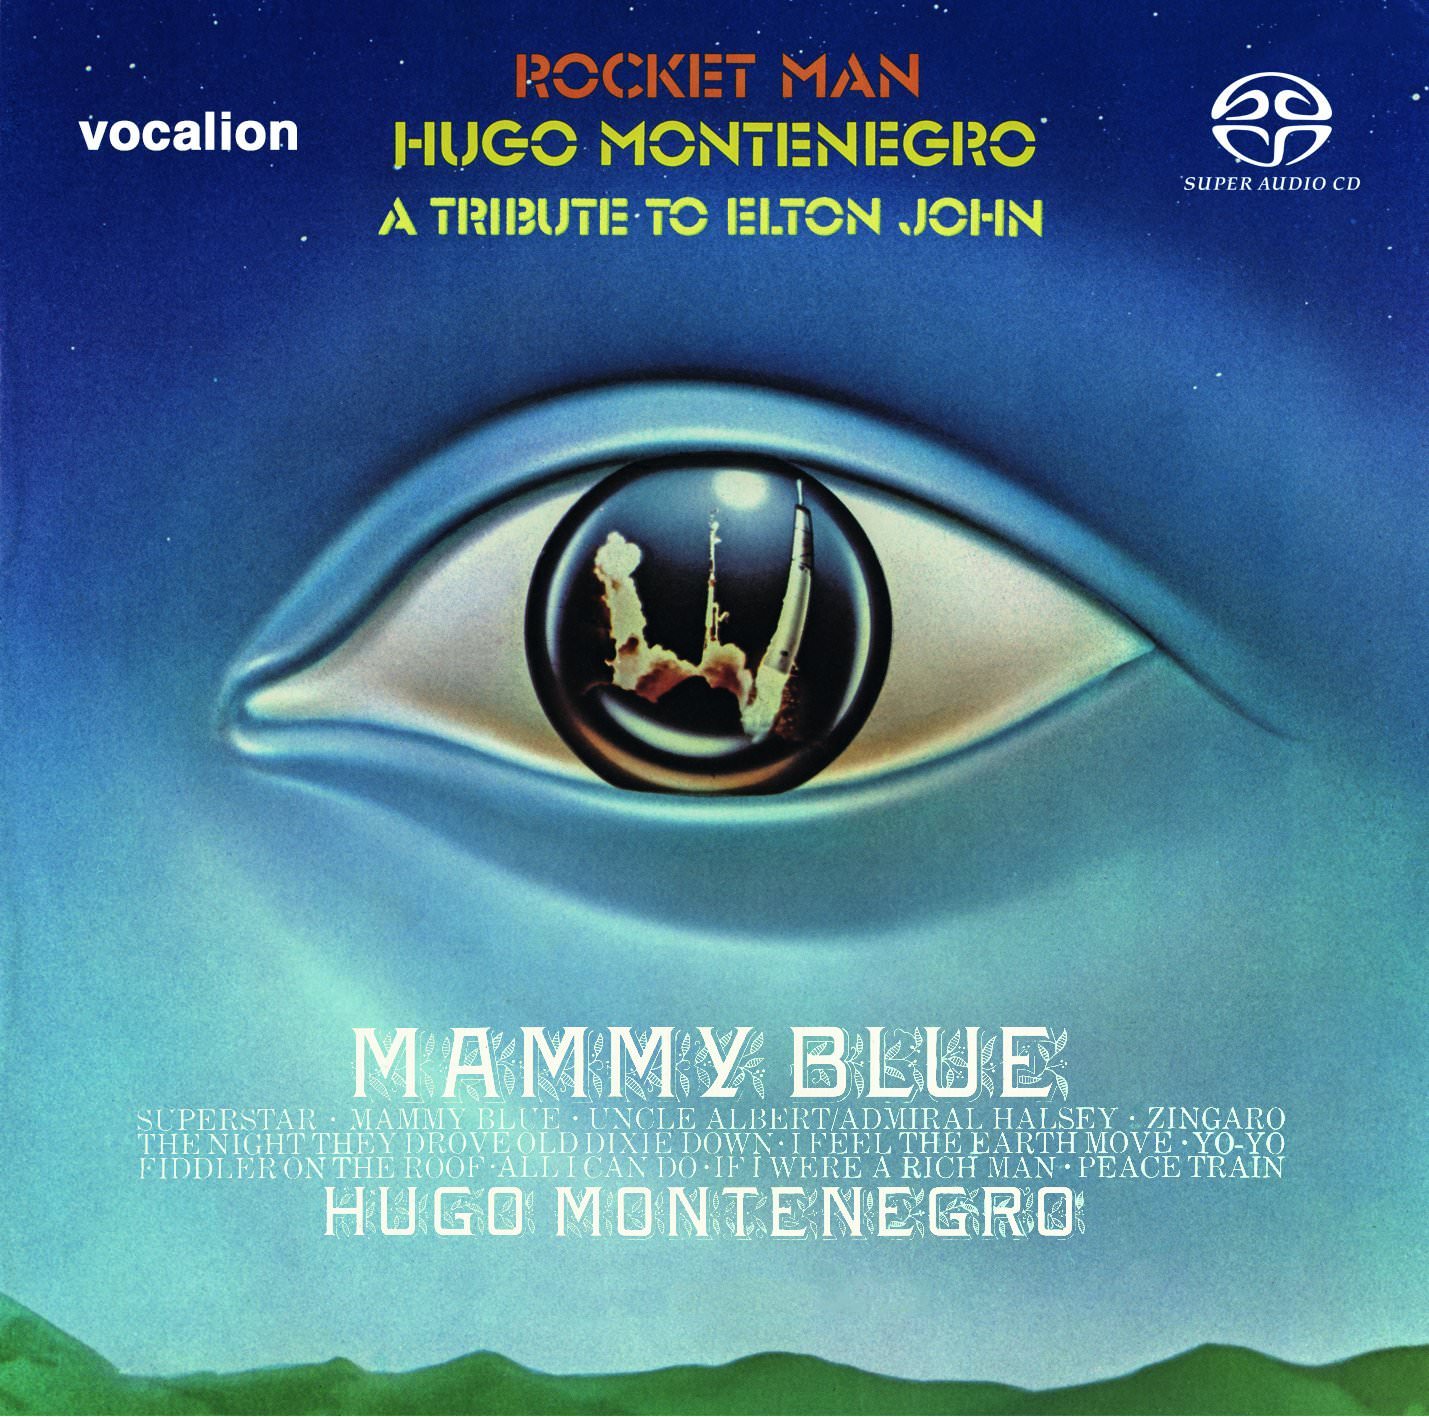 Hugo Montenegro - Rocket Man & Mammy Blue (1975/1971) [Reissue 2018] {SACD ISO + FLAC 24bit/88,2kHz}